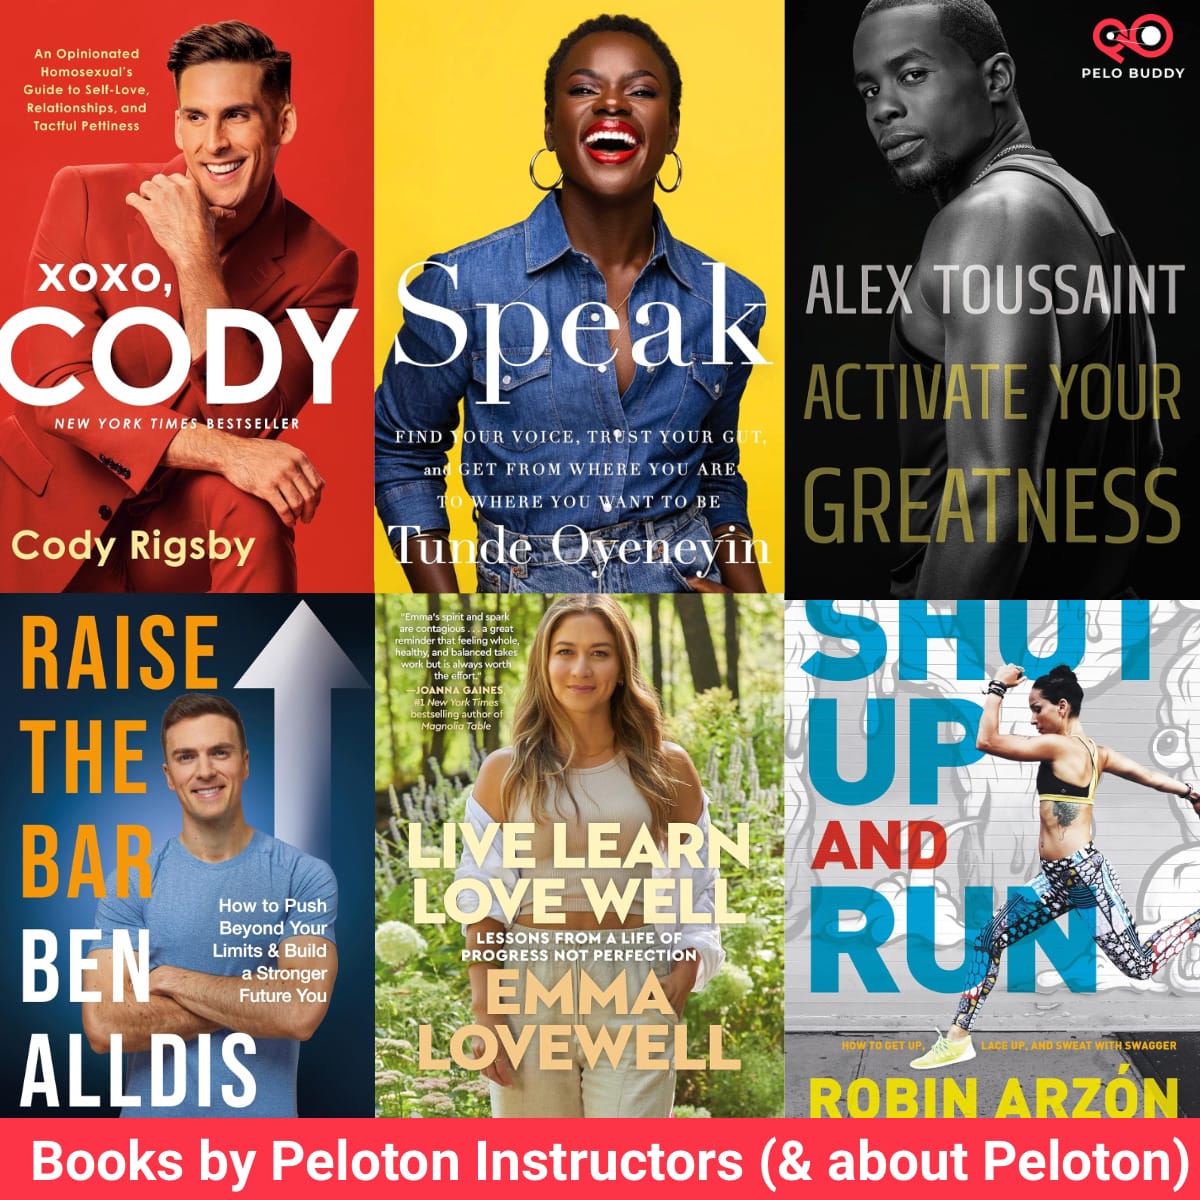 Books by Peloton Instructors & other Peloton Books - Peloton Buddy